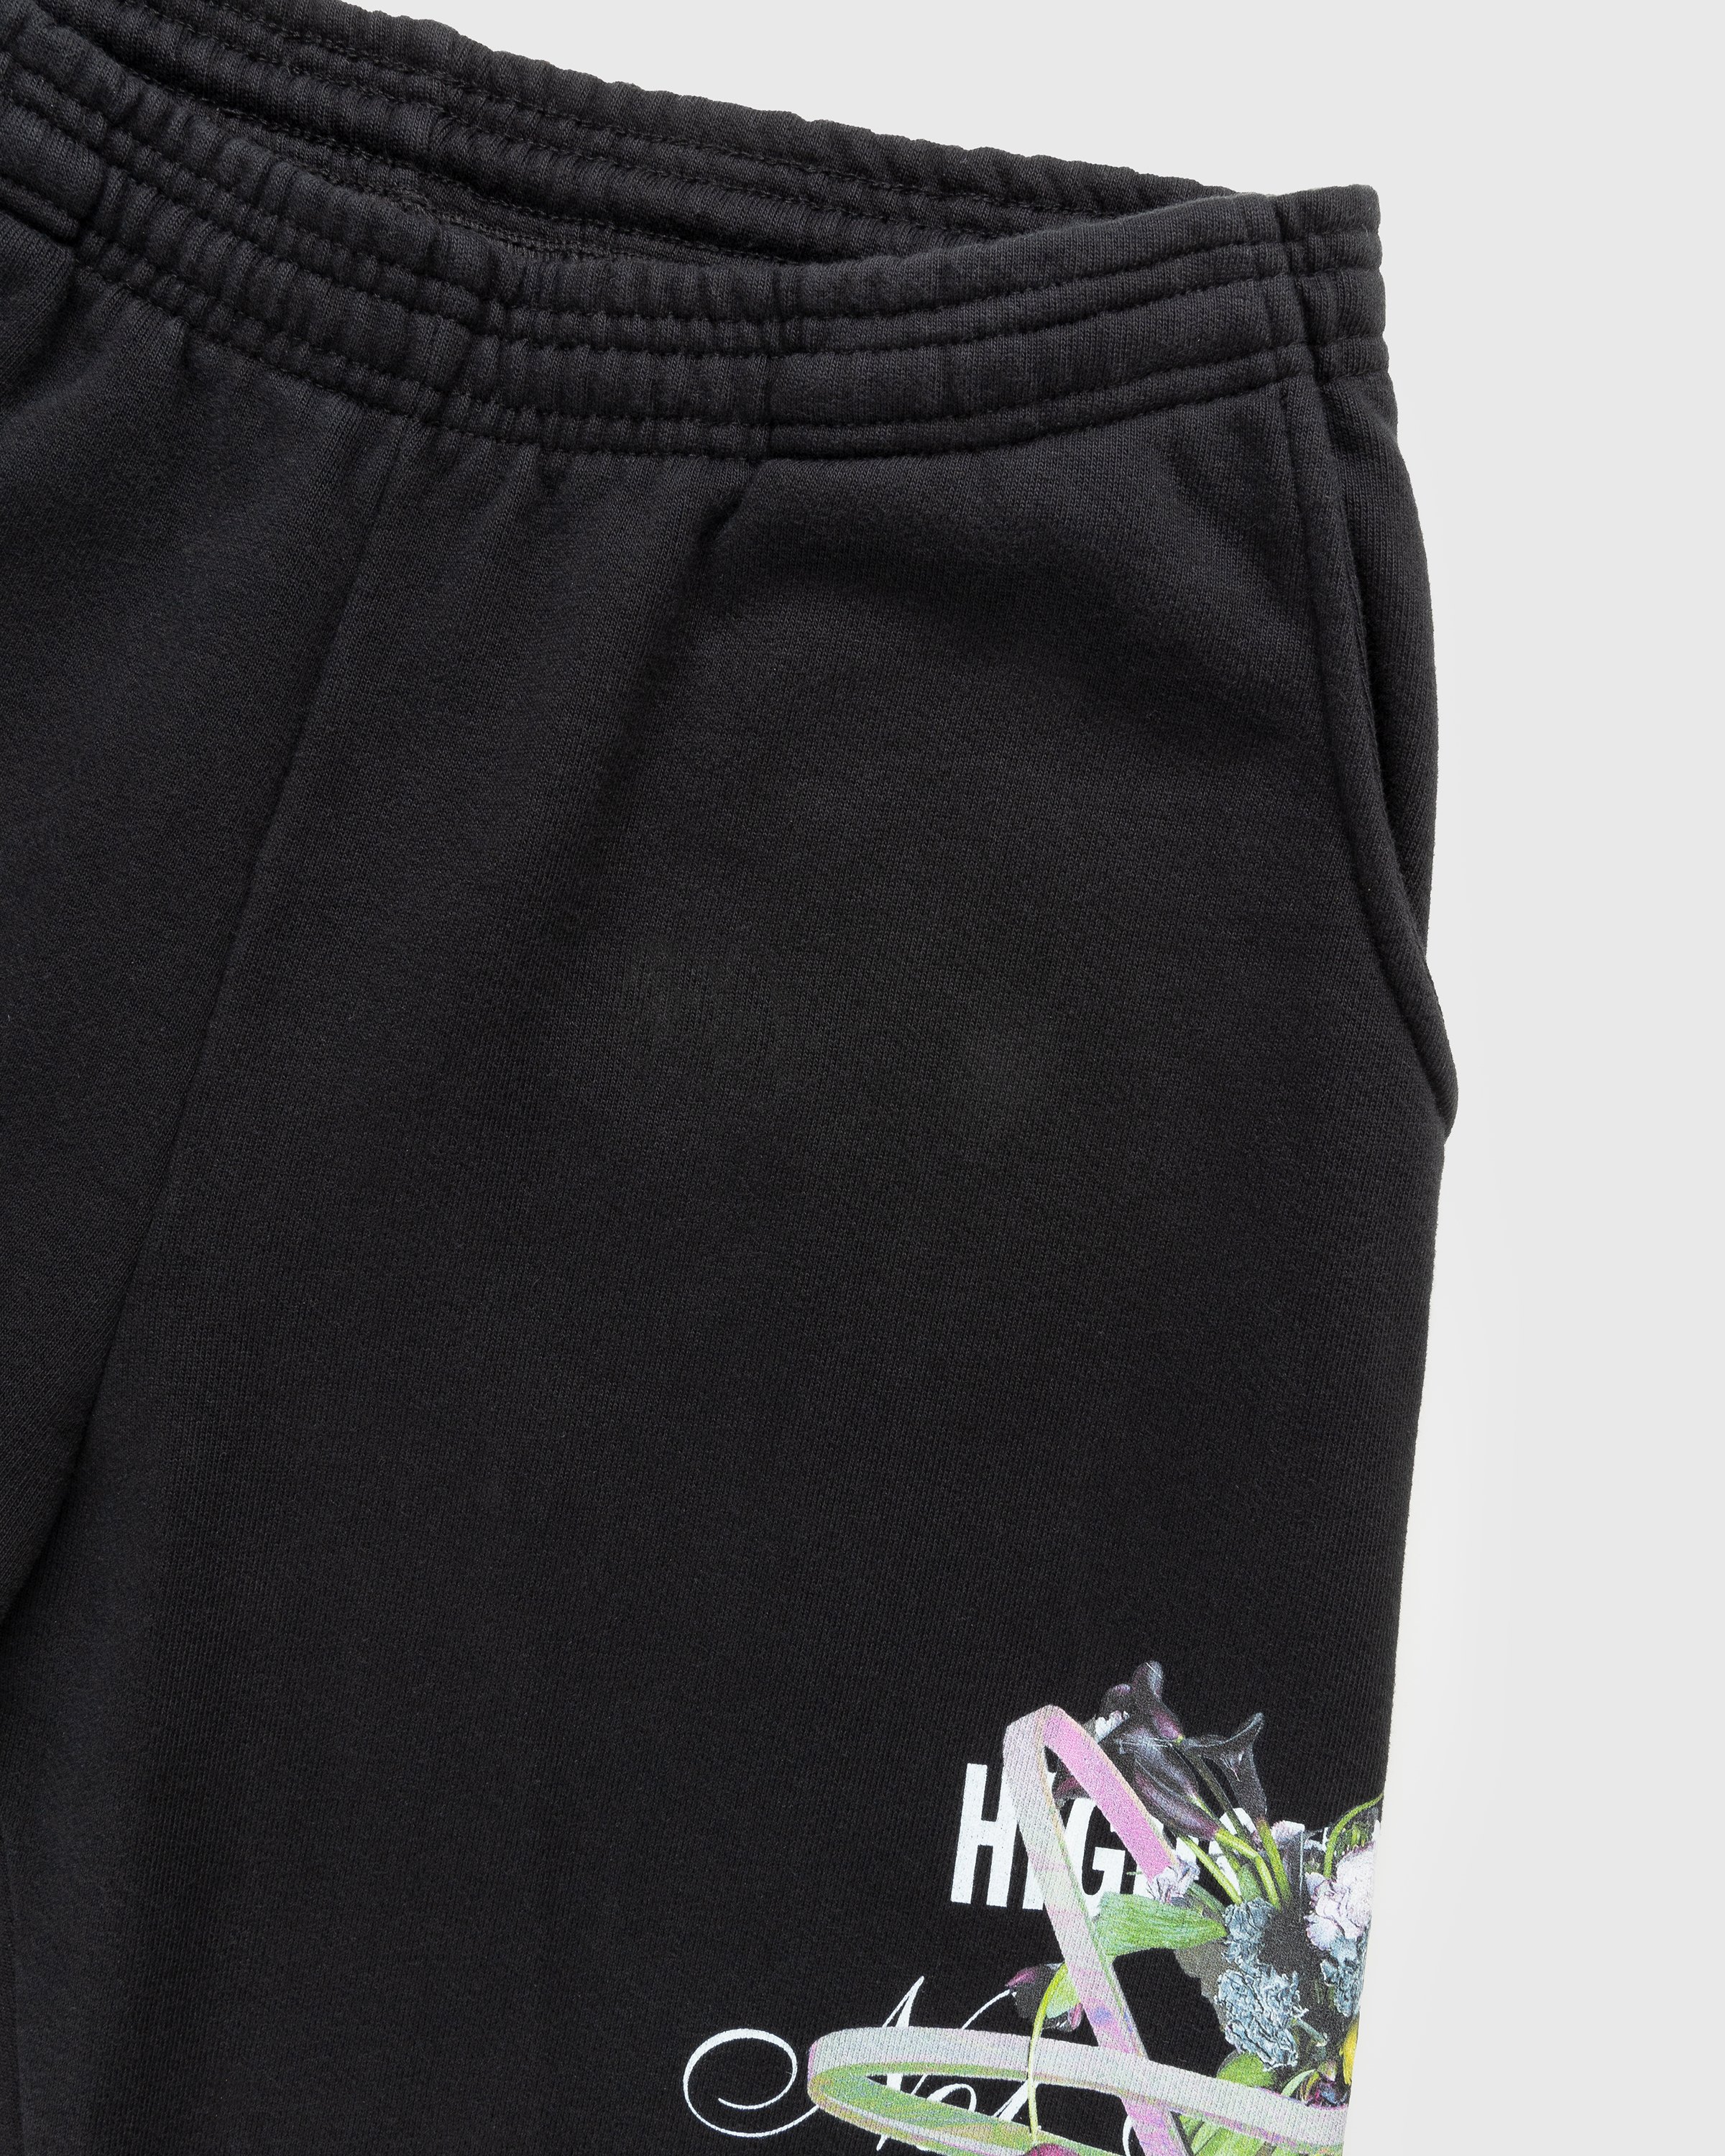 Bstroy x Highsnobiety - Not In Paris 4 Flower Sweatpants Black - Clothing - Black - Image 6